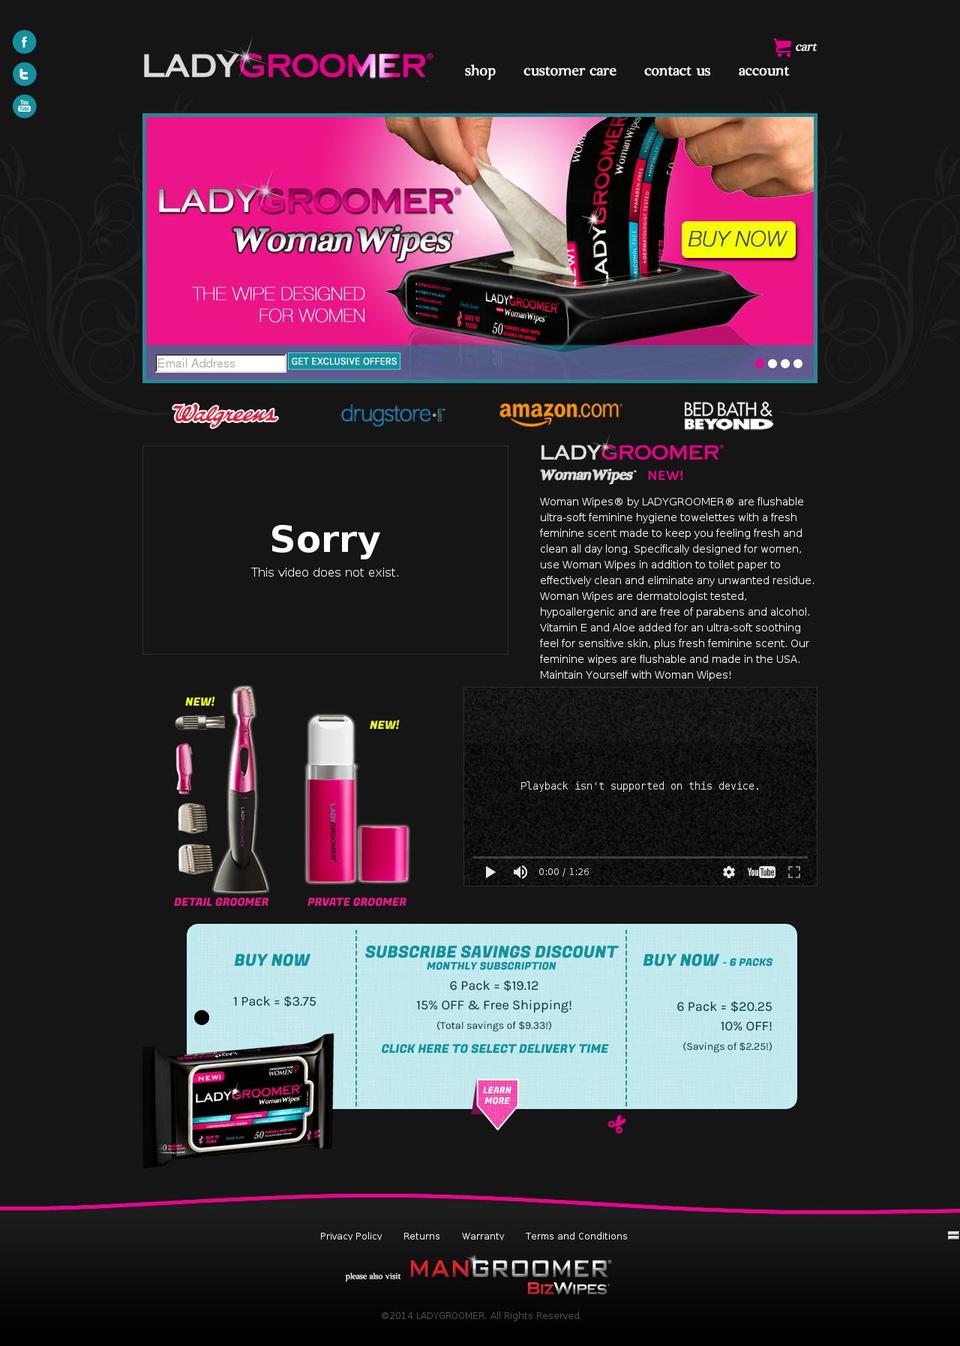 ladygroomer.info shopify website screenshot